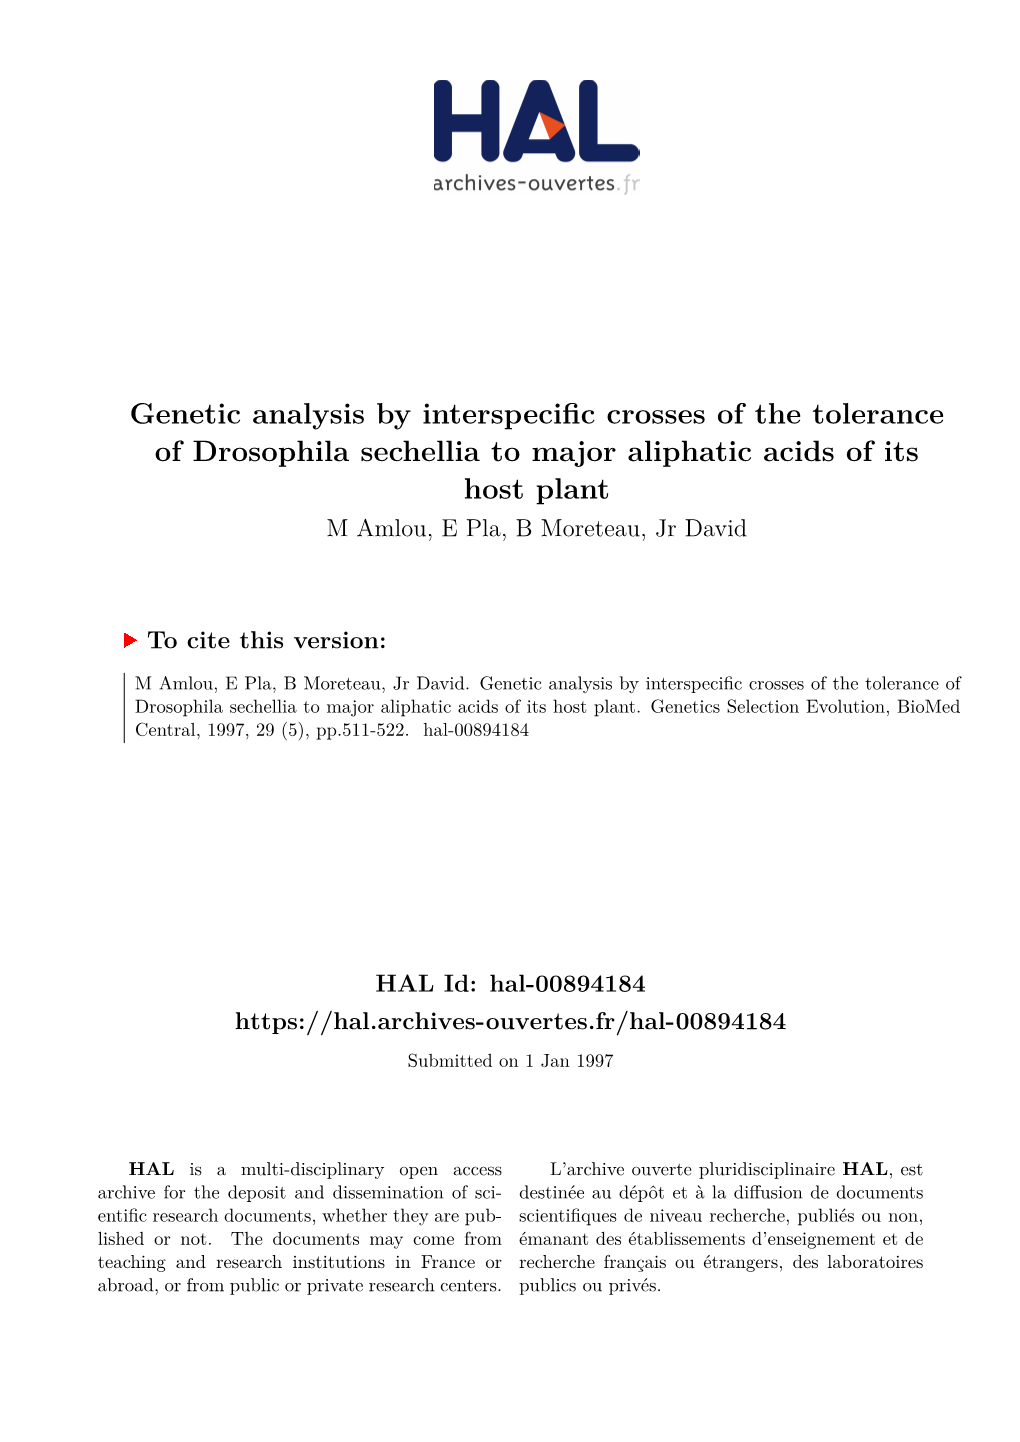 Genetic Analysis by Interspecific Crosses of the Tolerance of Drosophila Sechellia to Major Aliphatic Acids of Its Host Plant M Amlou, E Pla, B Moreteau, Jr David